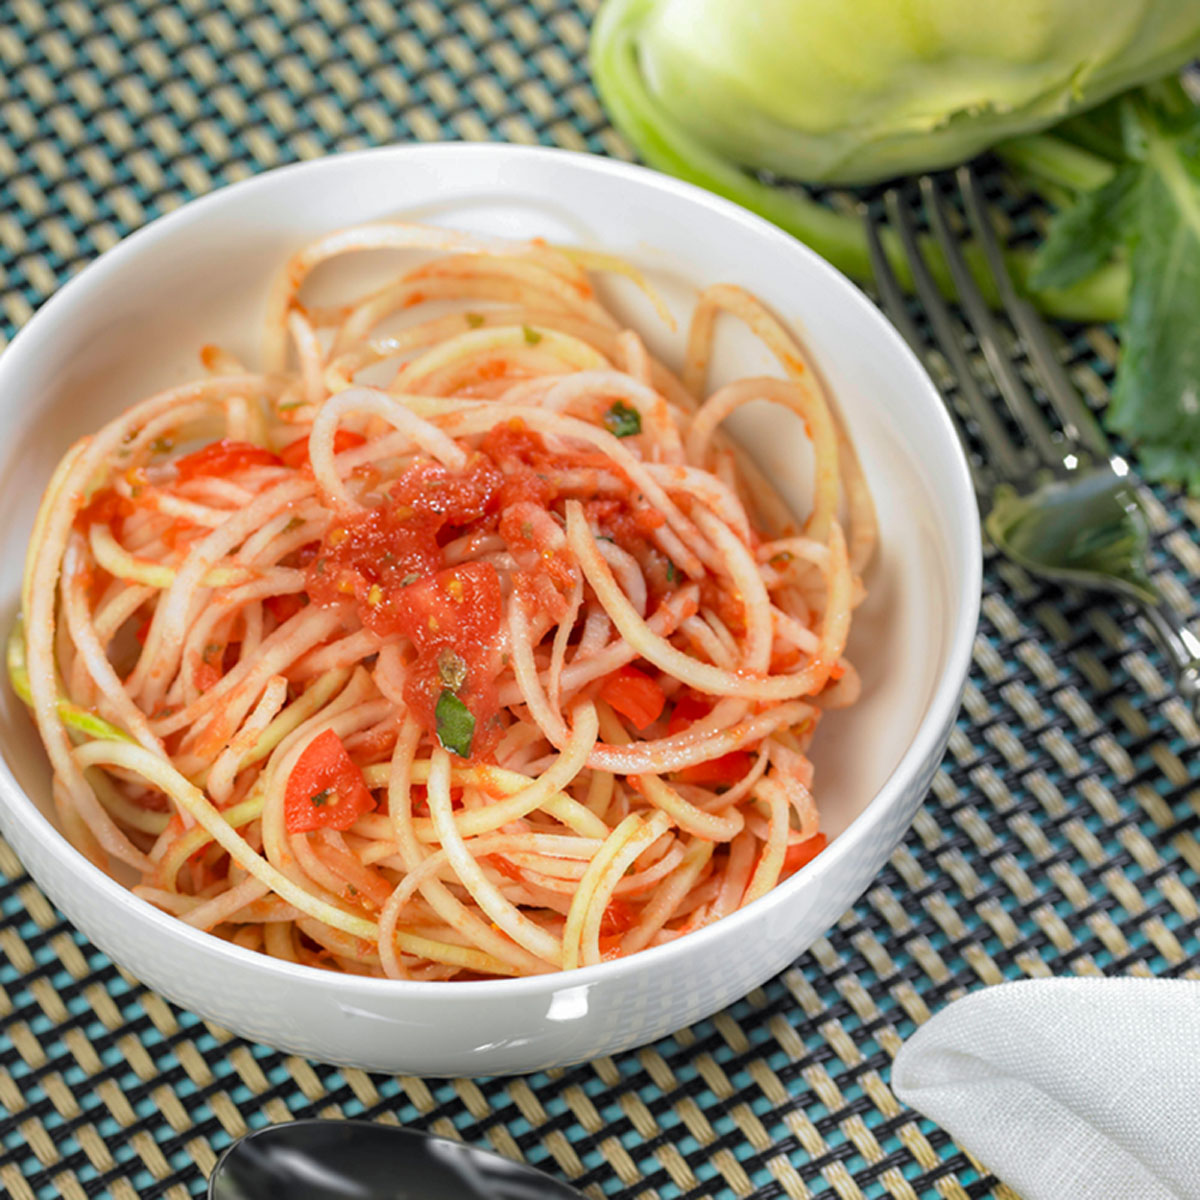 Kohlrabi-Spaghetti mit Tomatensoße und falschem Parmesan